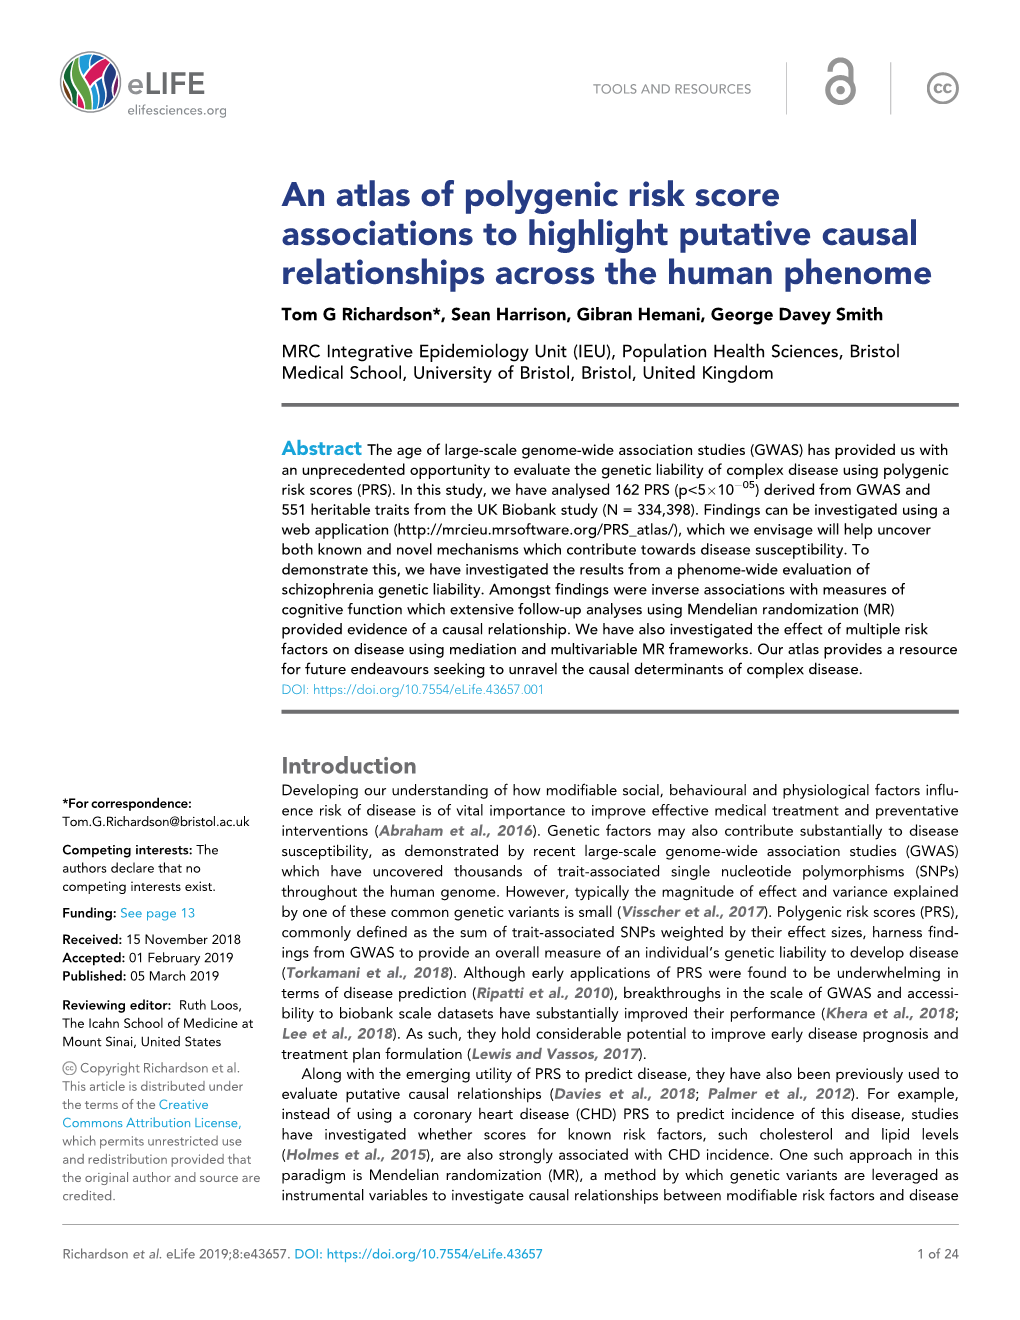 An Atlas of Polygenic Risk Score Associations to Highlight Putative